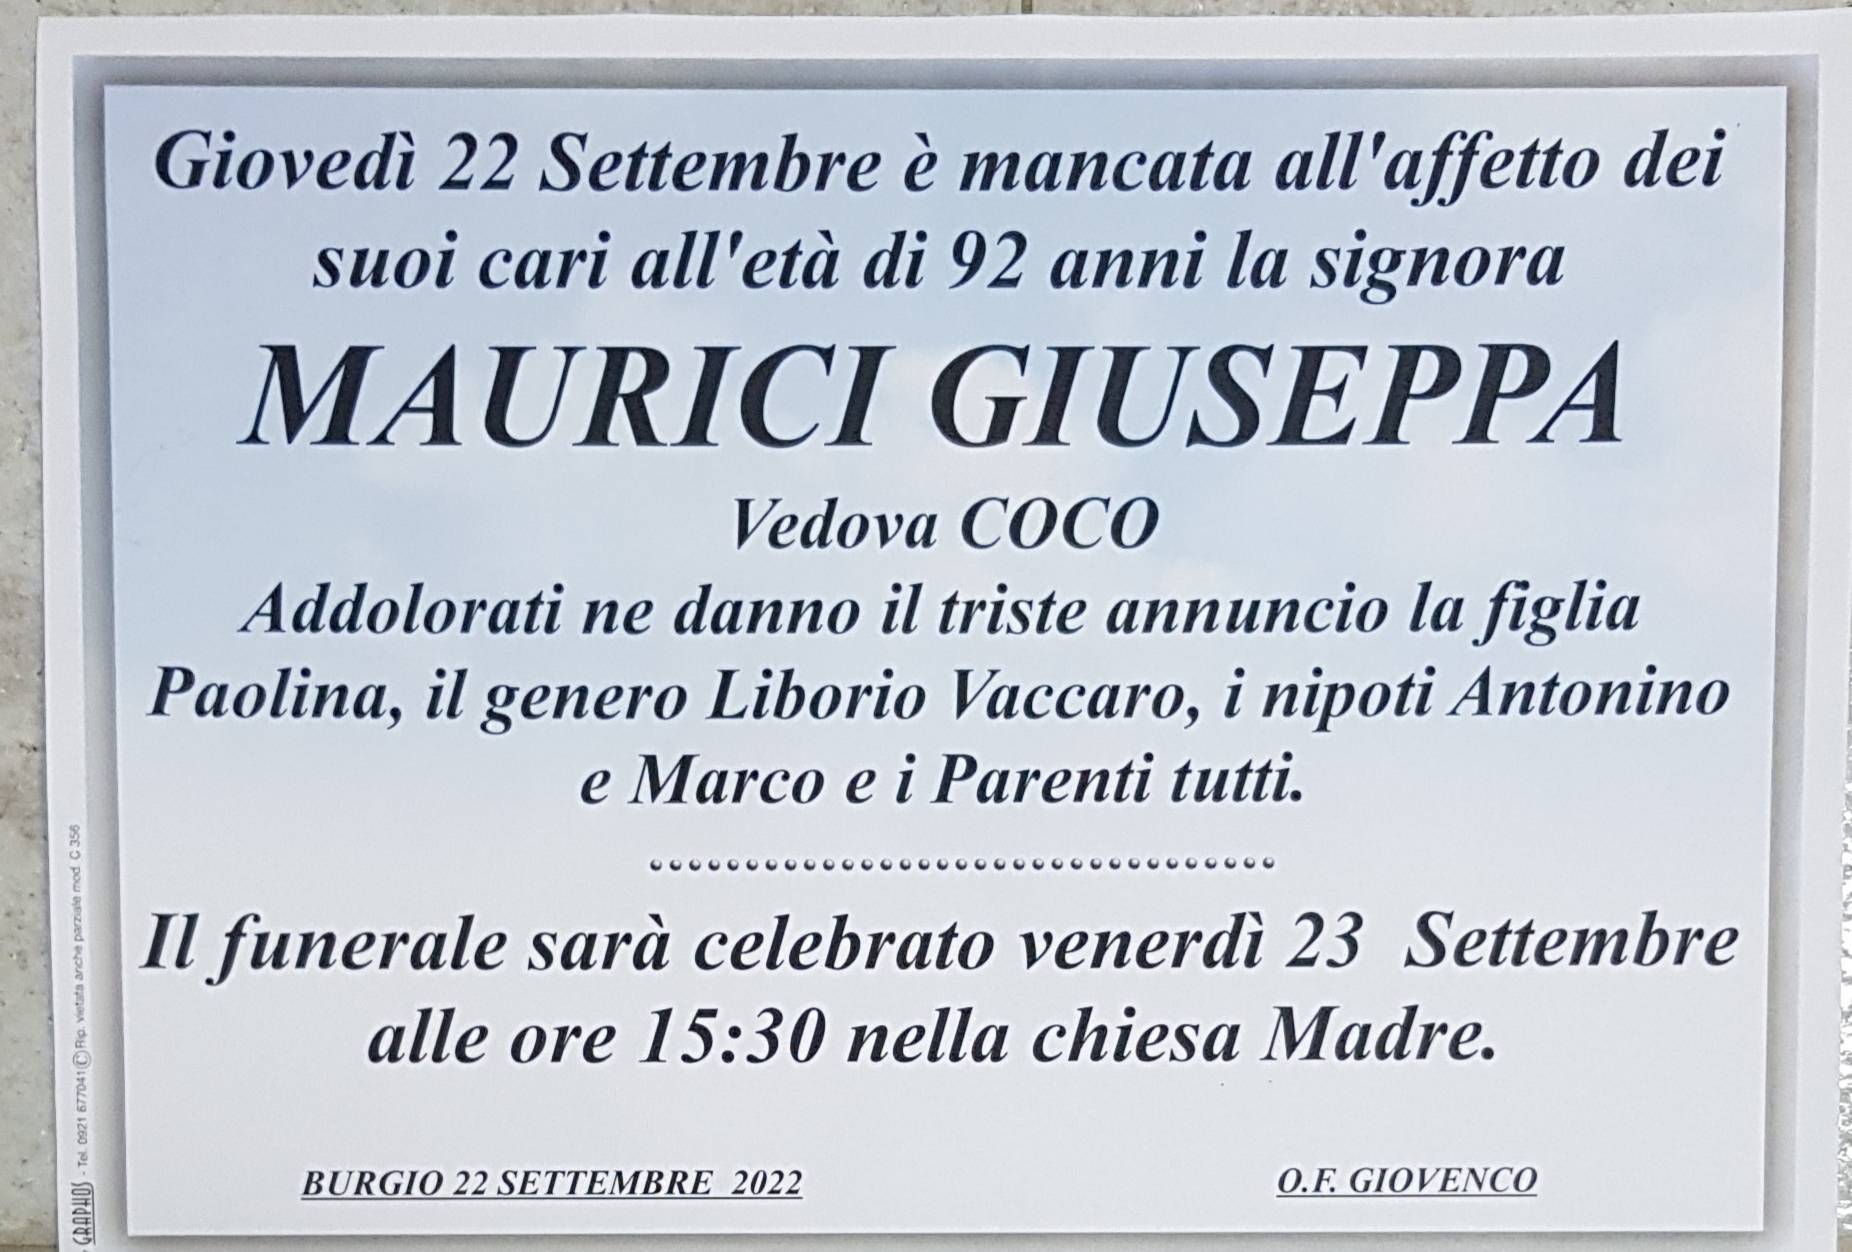 Giuseppa  Maurici